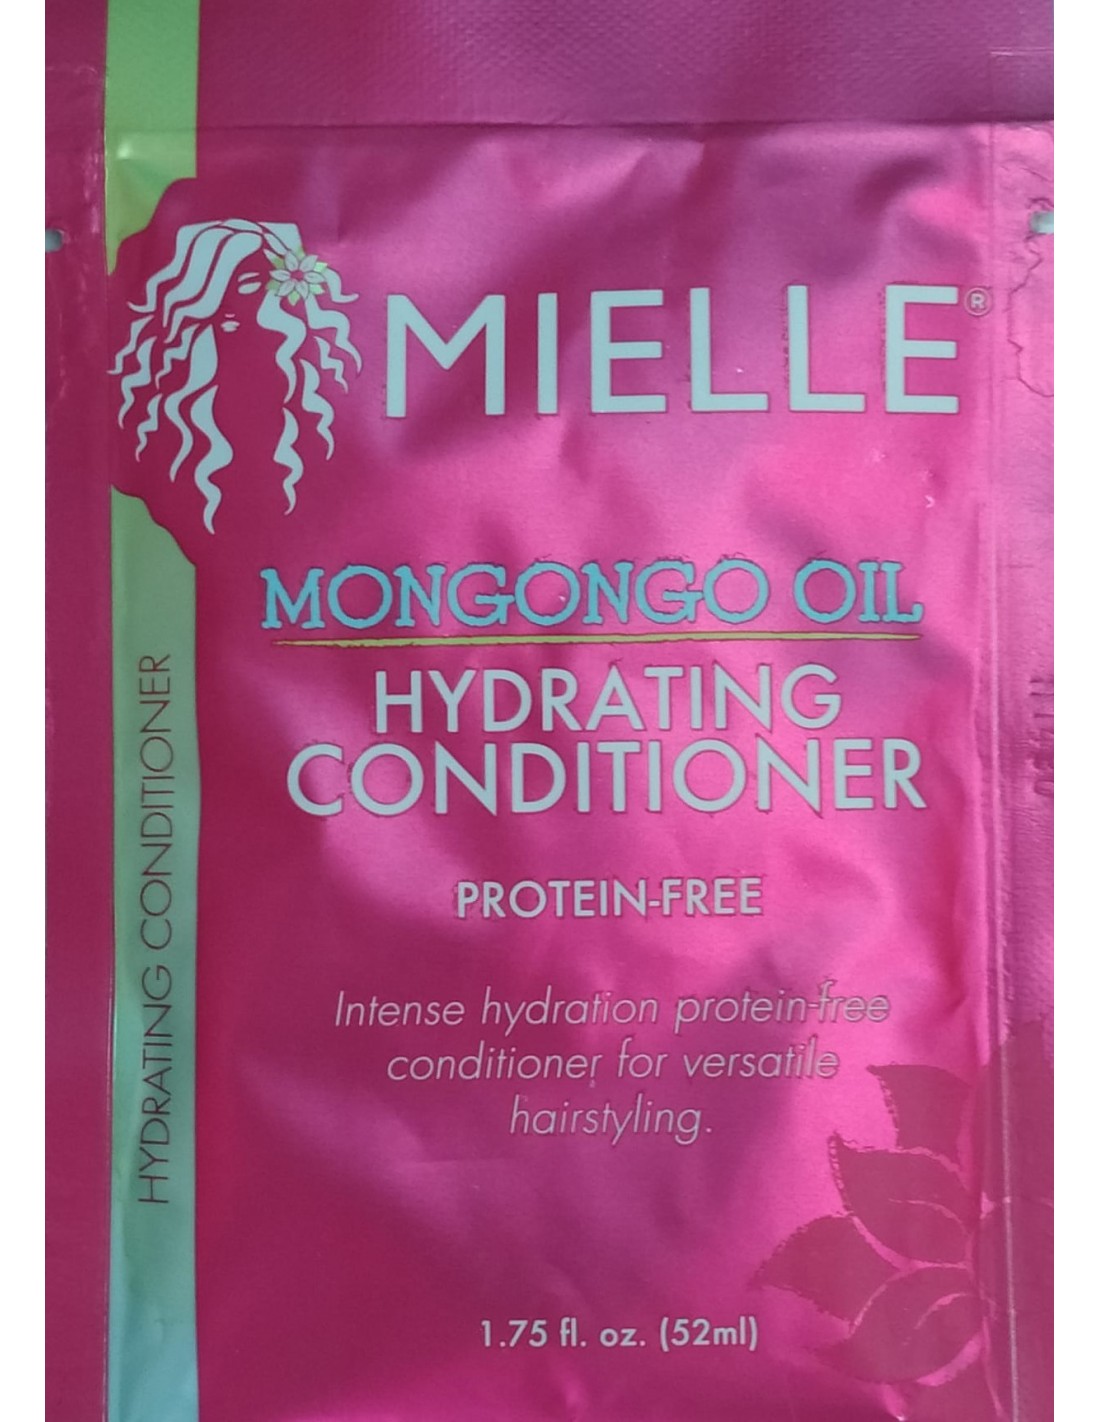 Mascarilla Mongongo Oil Protein Free Hydrating Conditioner Mielle Organics  52ml